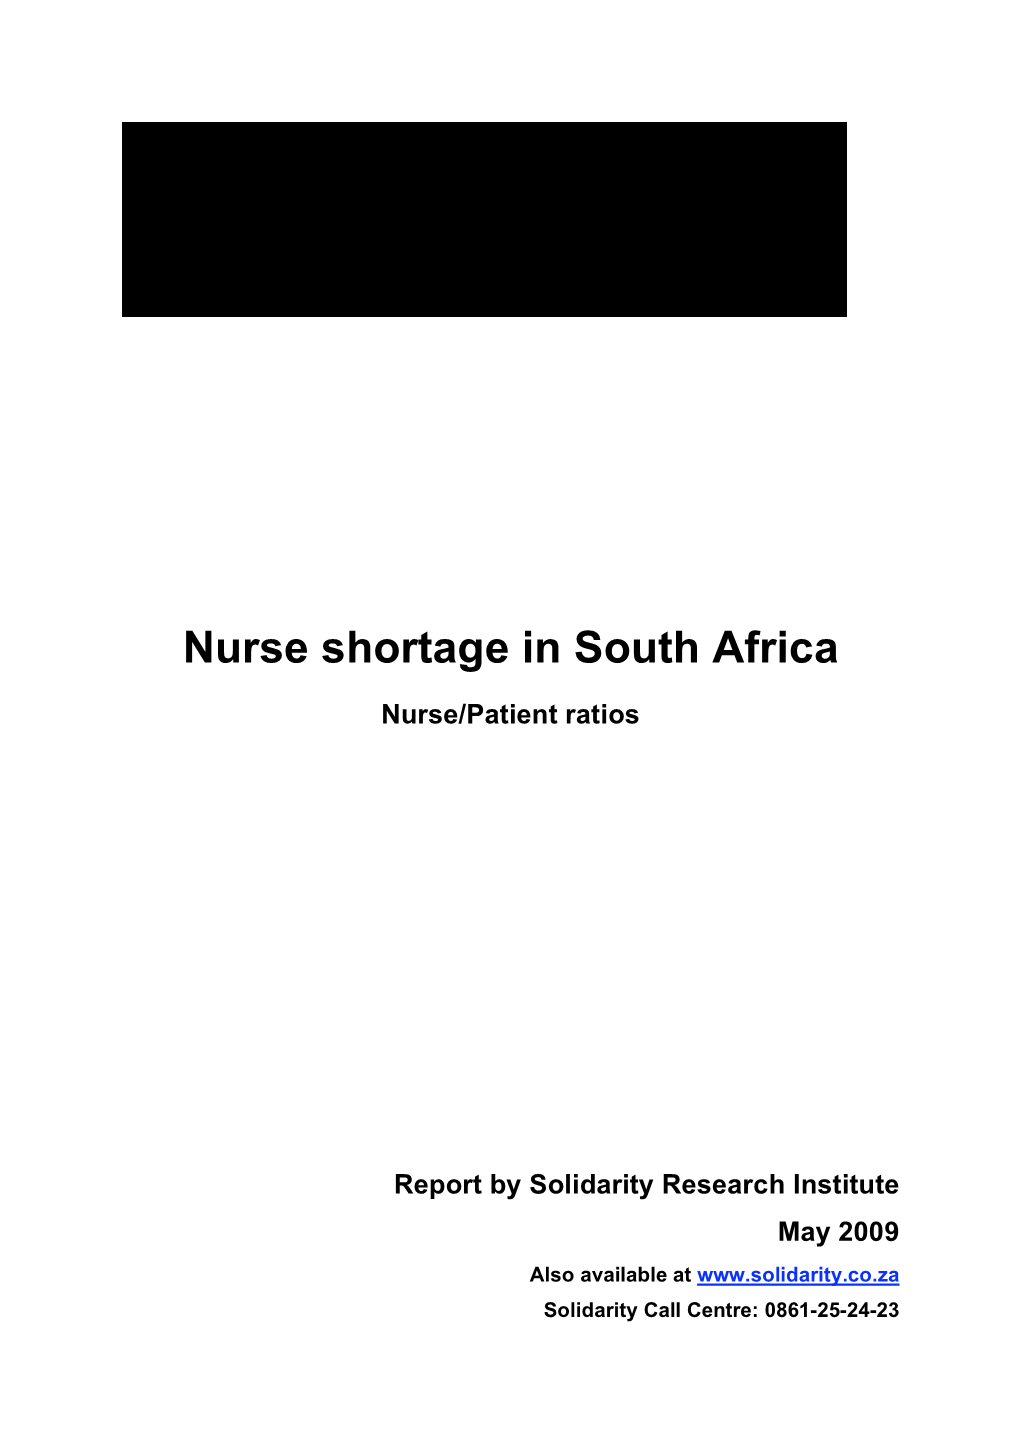 Nurse Shortage in South Africa